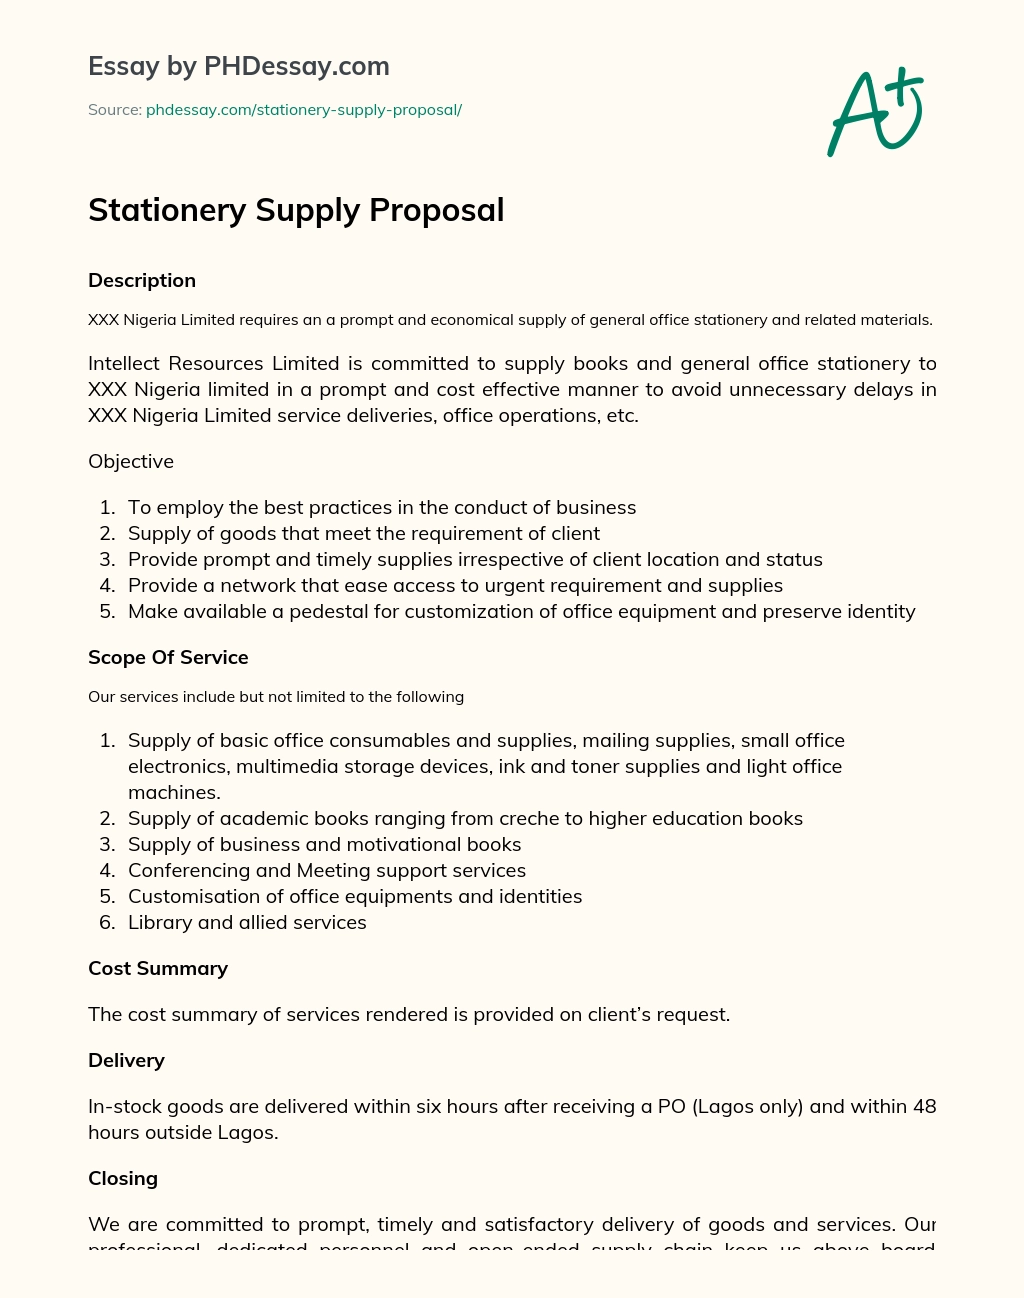 Stationery Supply Proposal essay